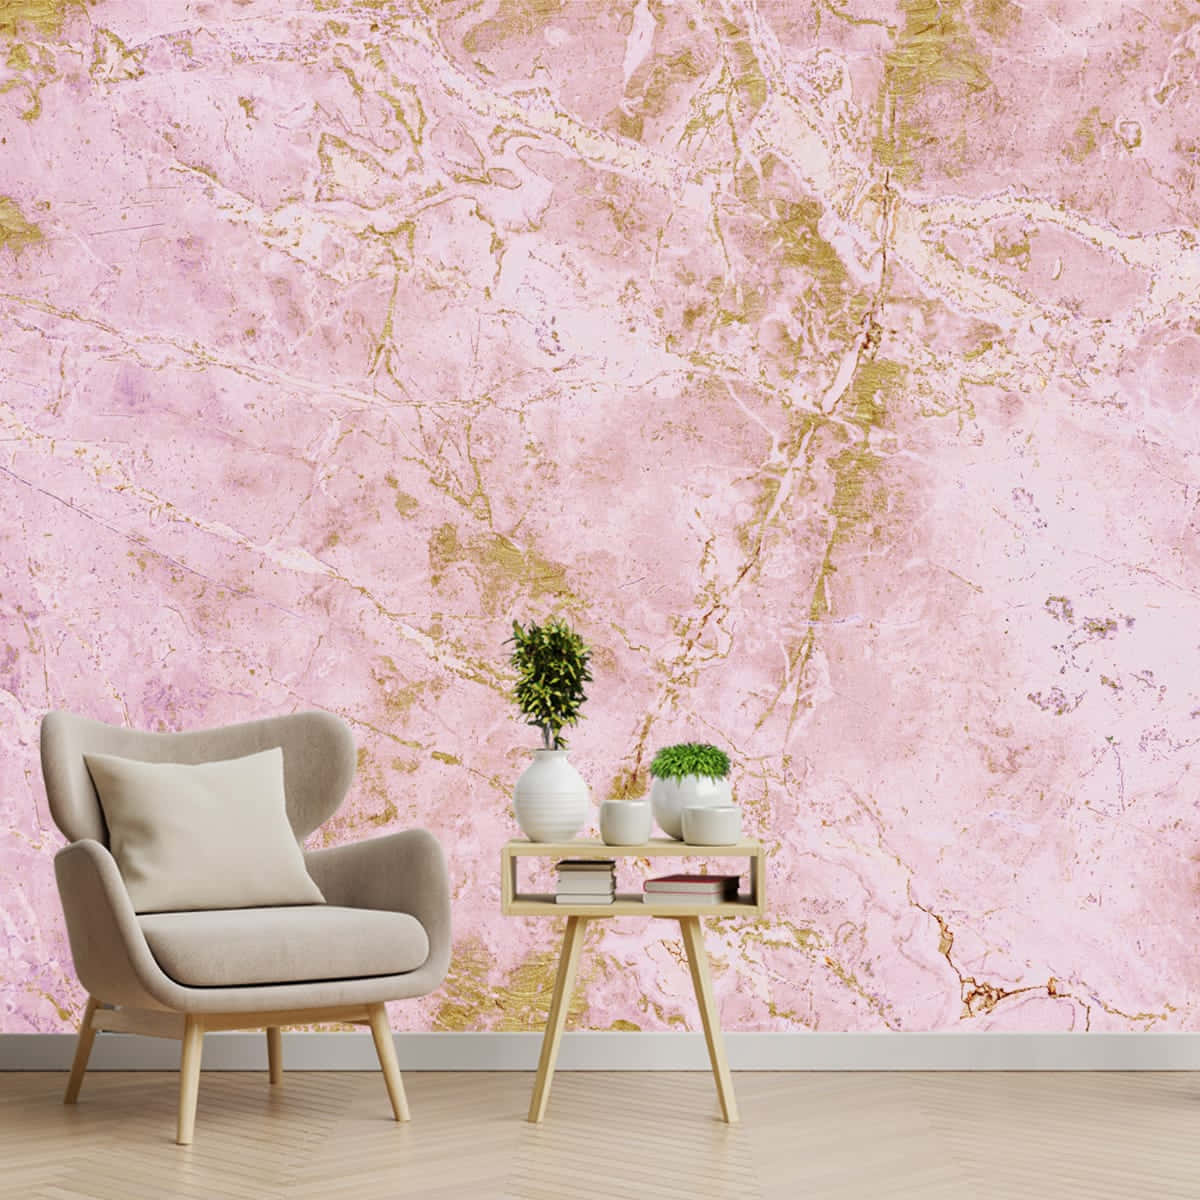 Pink Marble Wall Interior Design Wallpaper